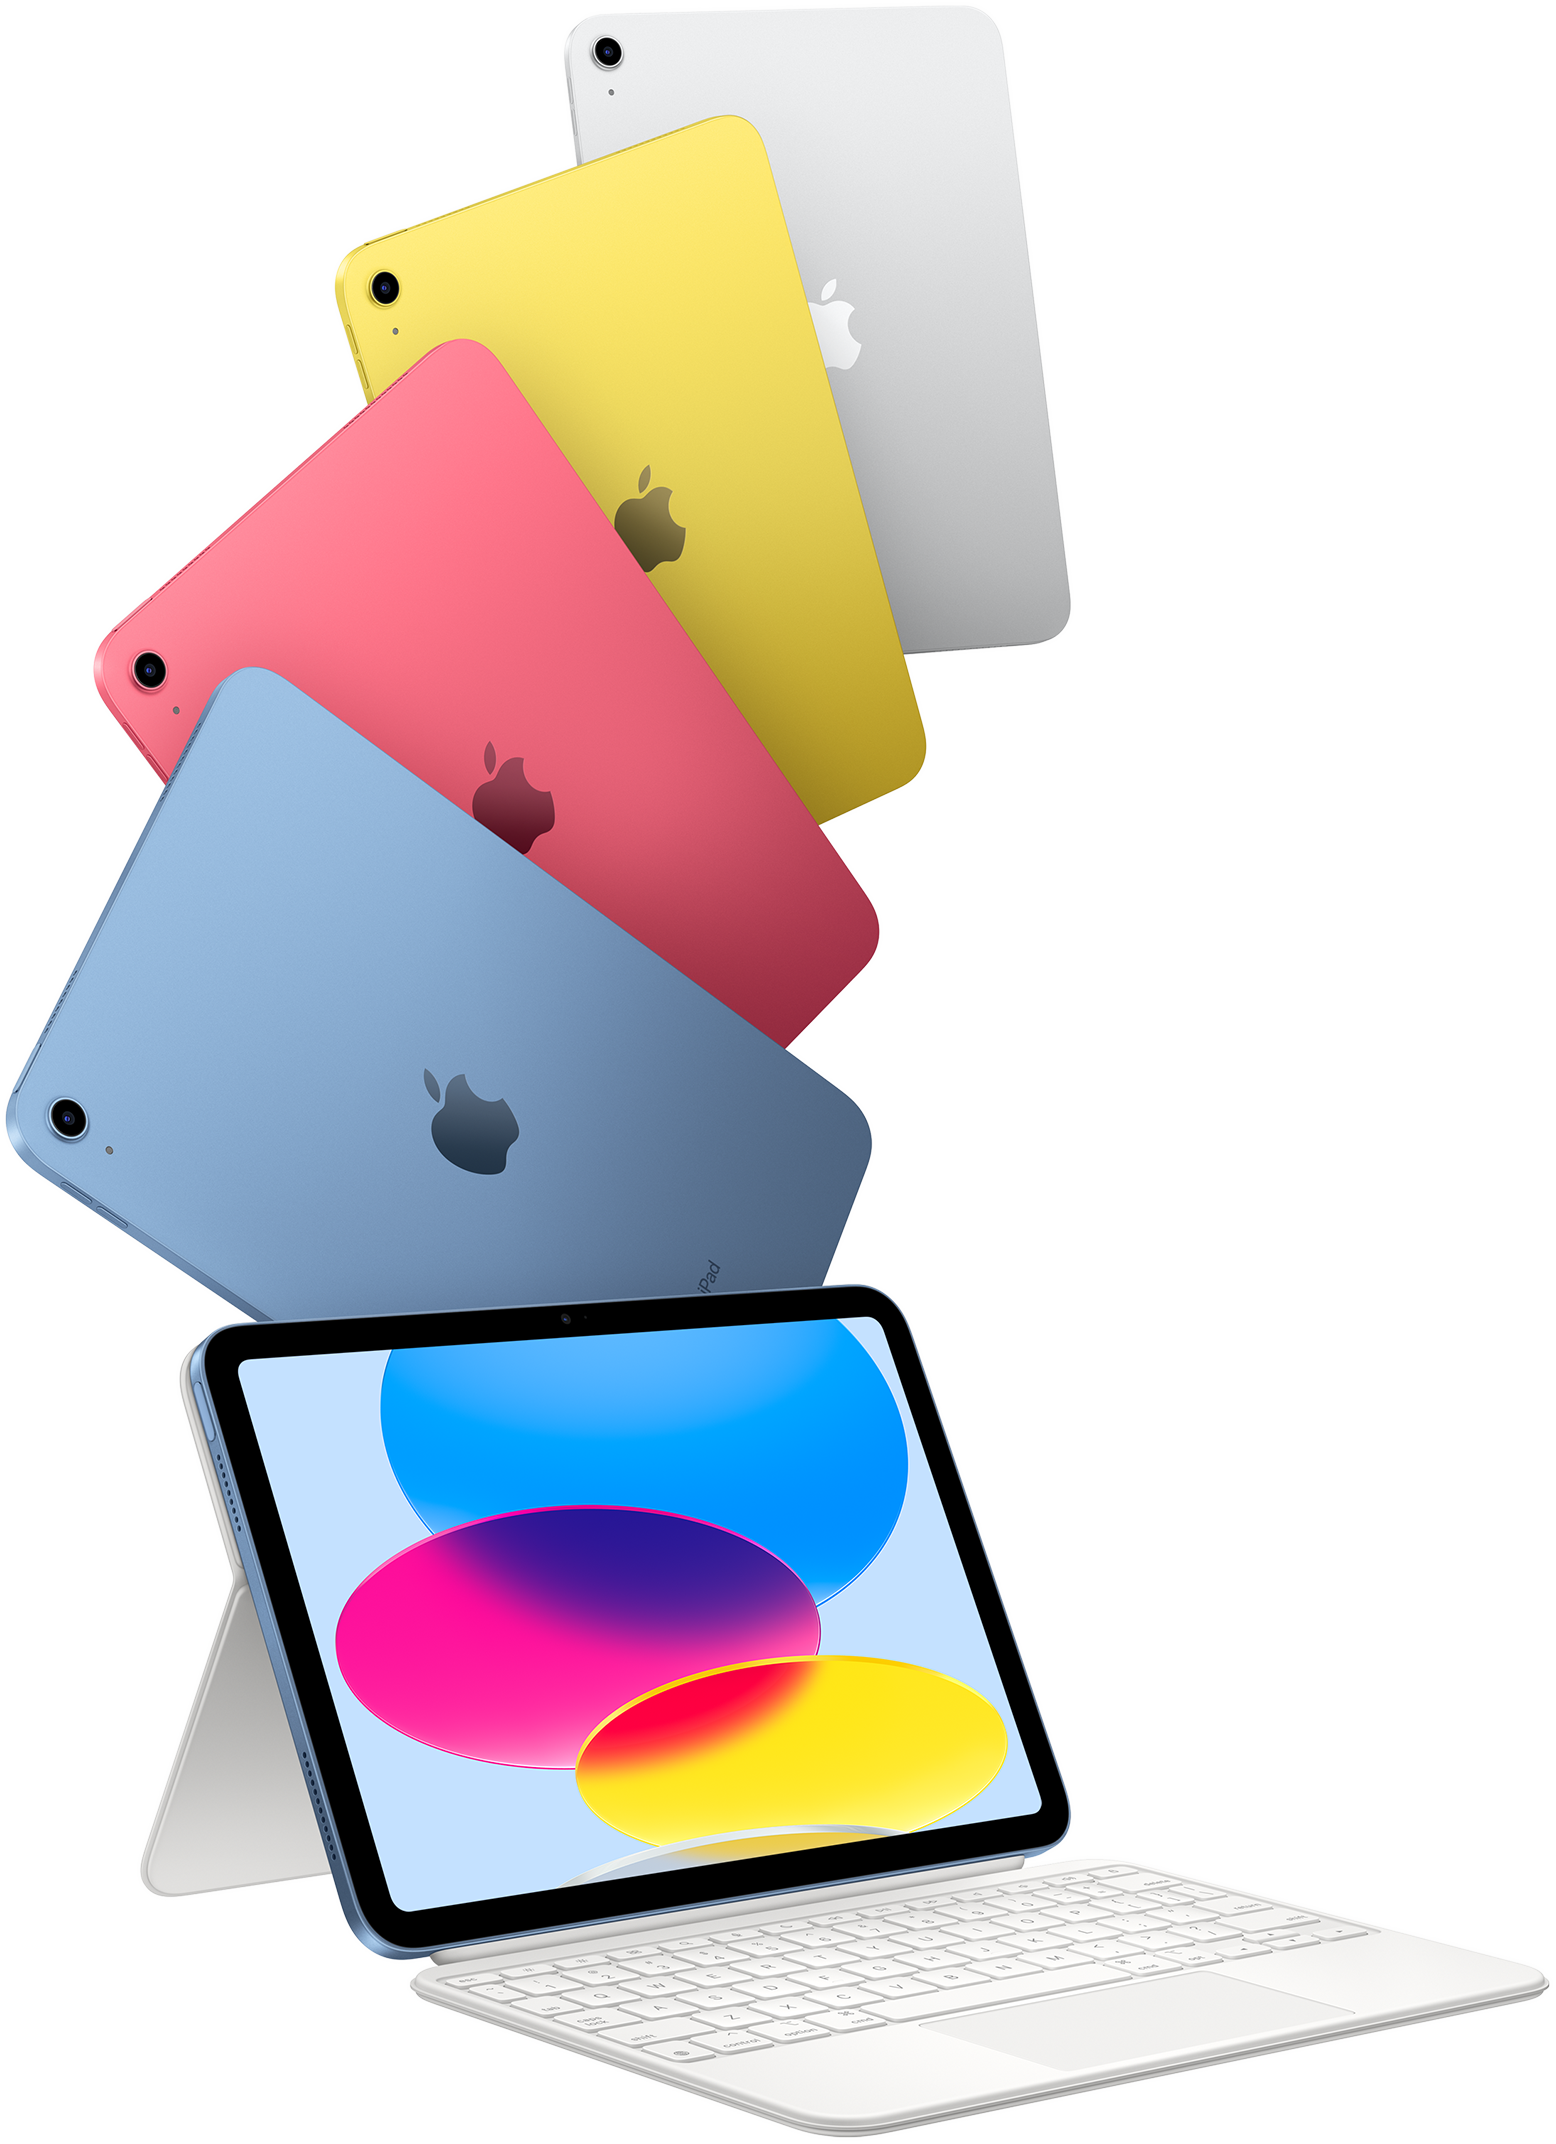 Ipad بألوان الأزرق والوردي والأصفر والفضي وجهاز Ipad واحد متصل ب Magic Keyboard Folio.